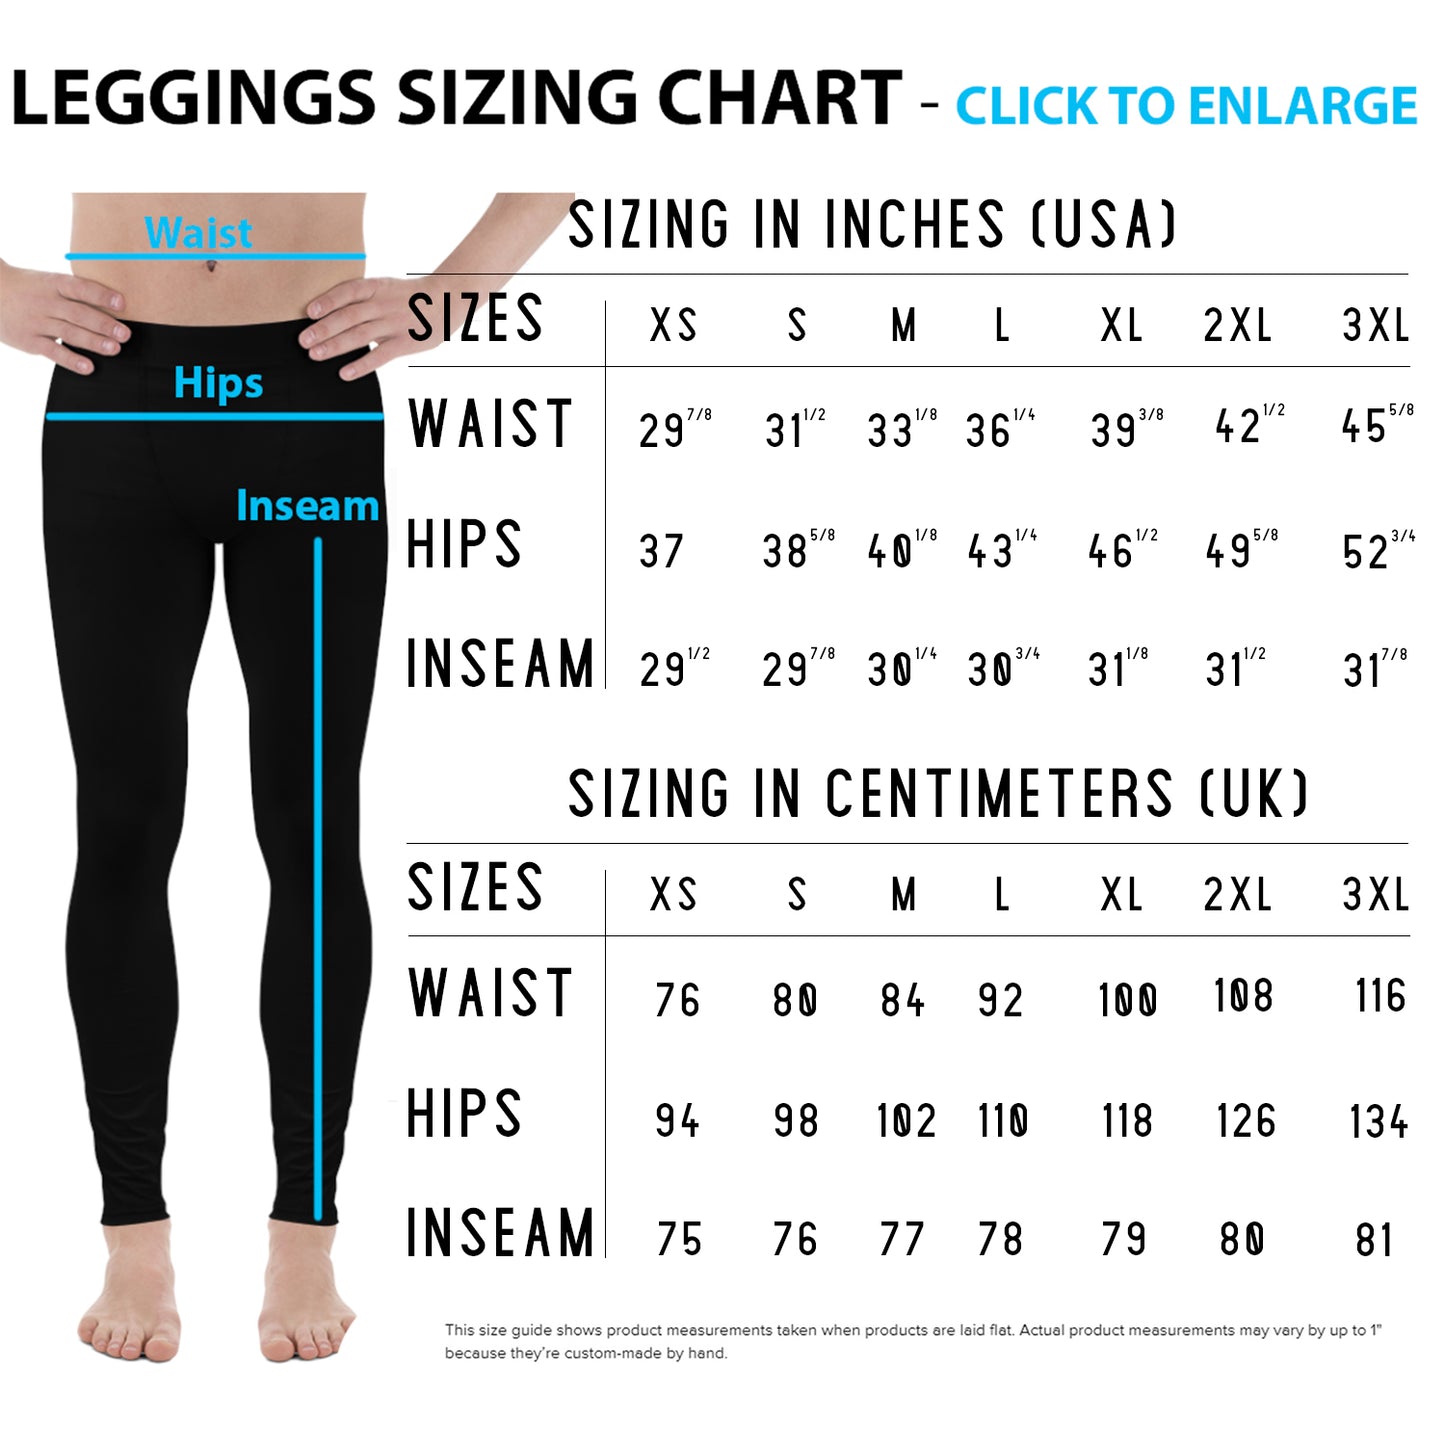 Men's Yoga Pants - Dragon Leggings with Scales